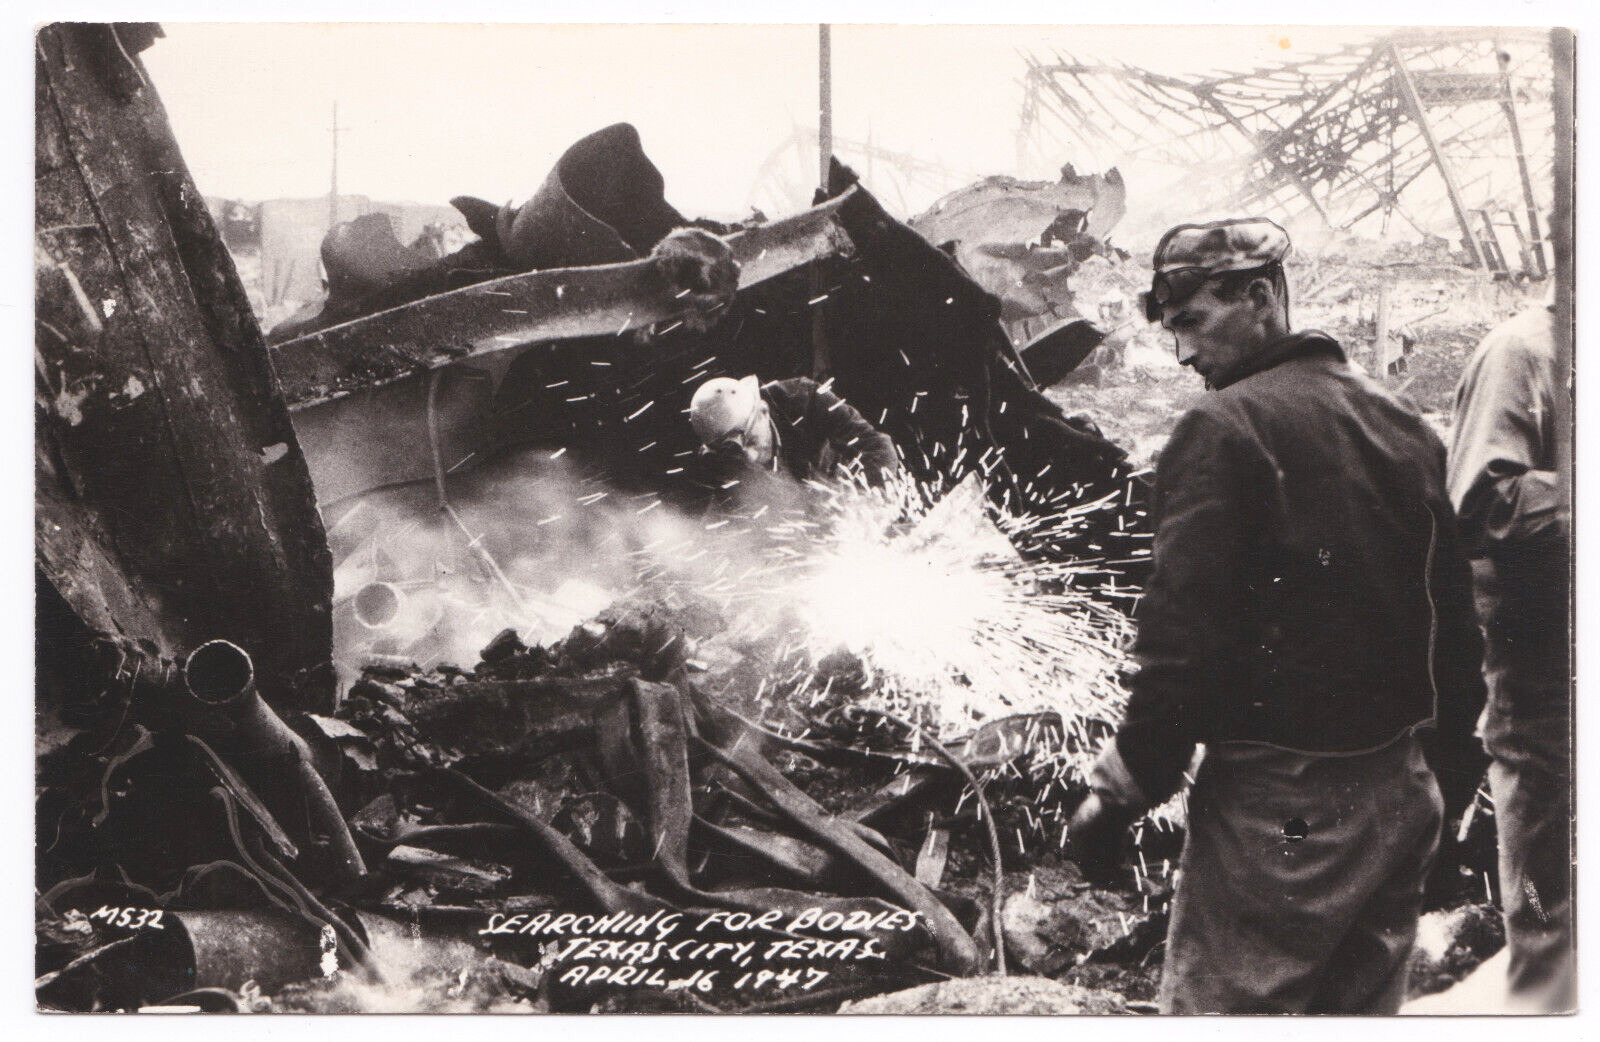 Texas City Port Galveston Bay Oil Explosion April 16 1947 Search For Bodies RPPC